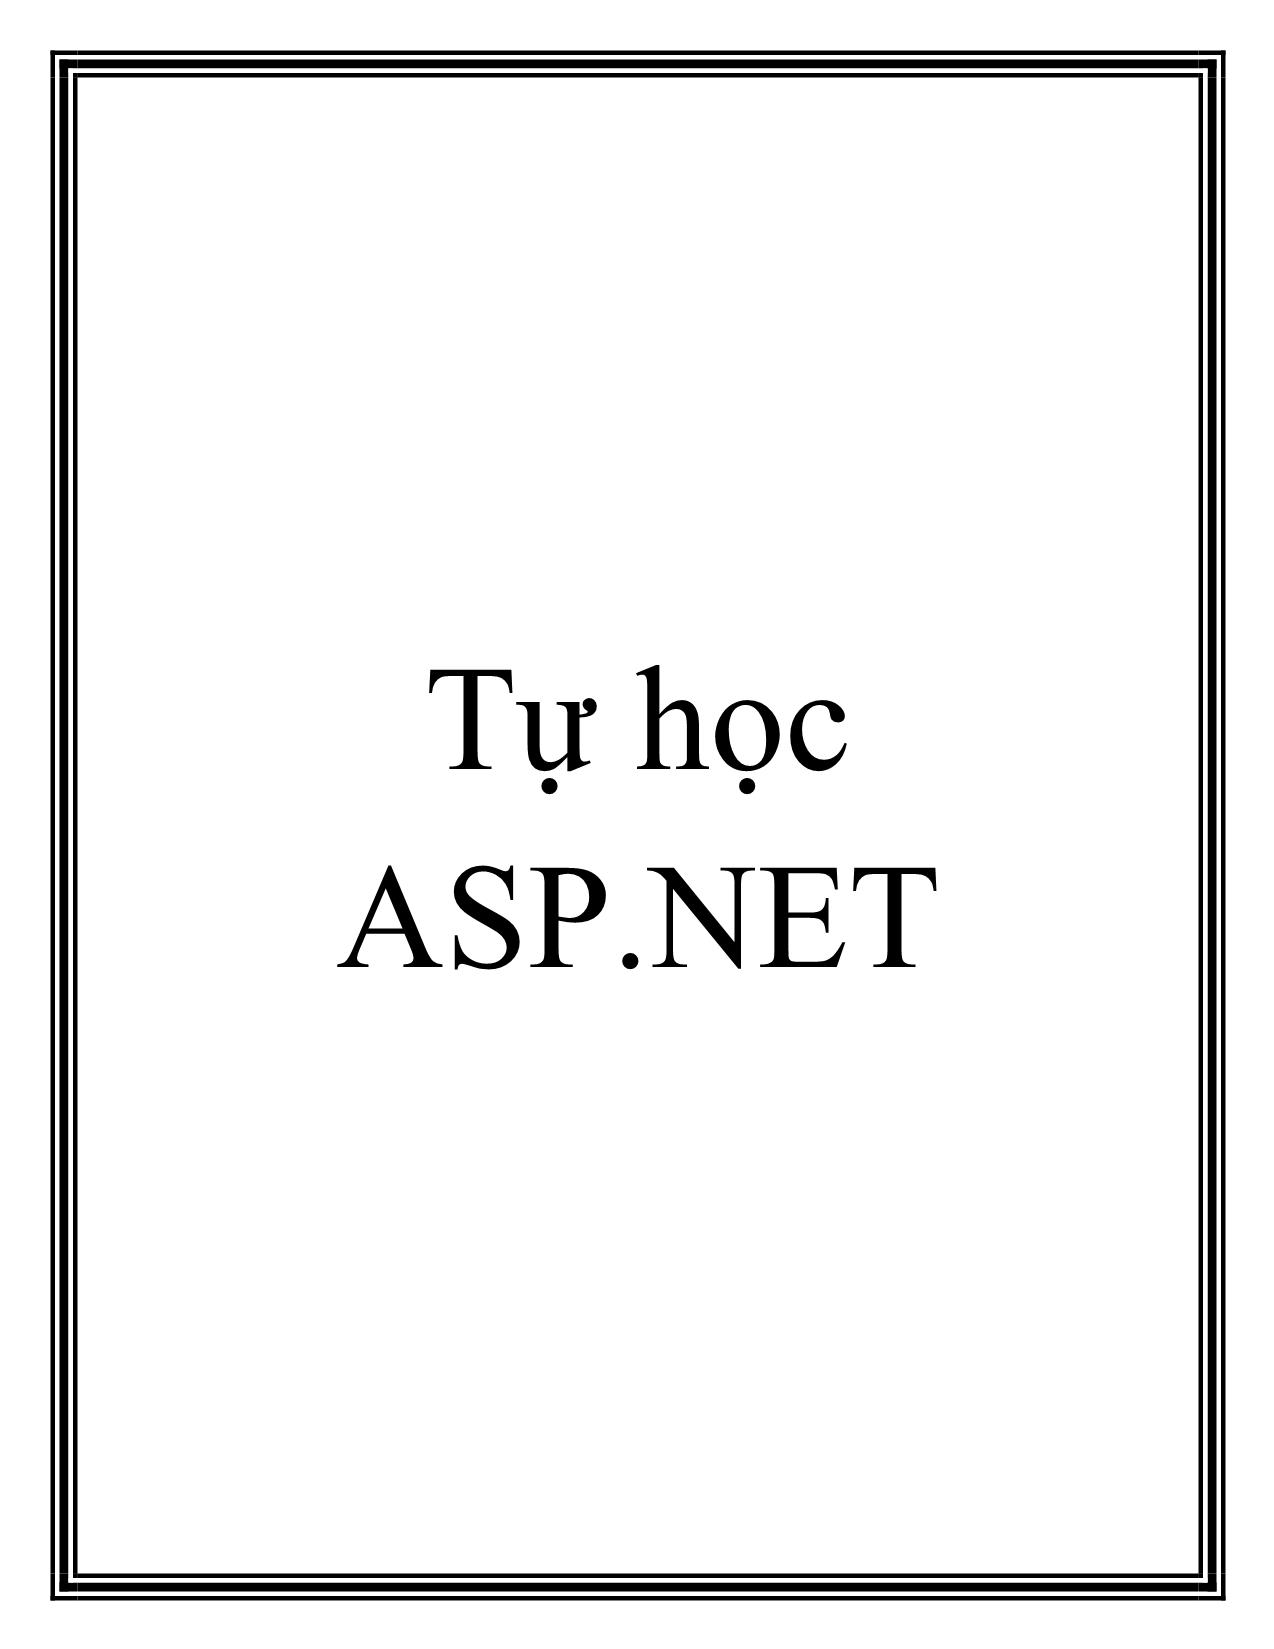 Tự học ASP.NET trang 1